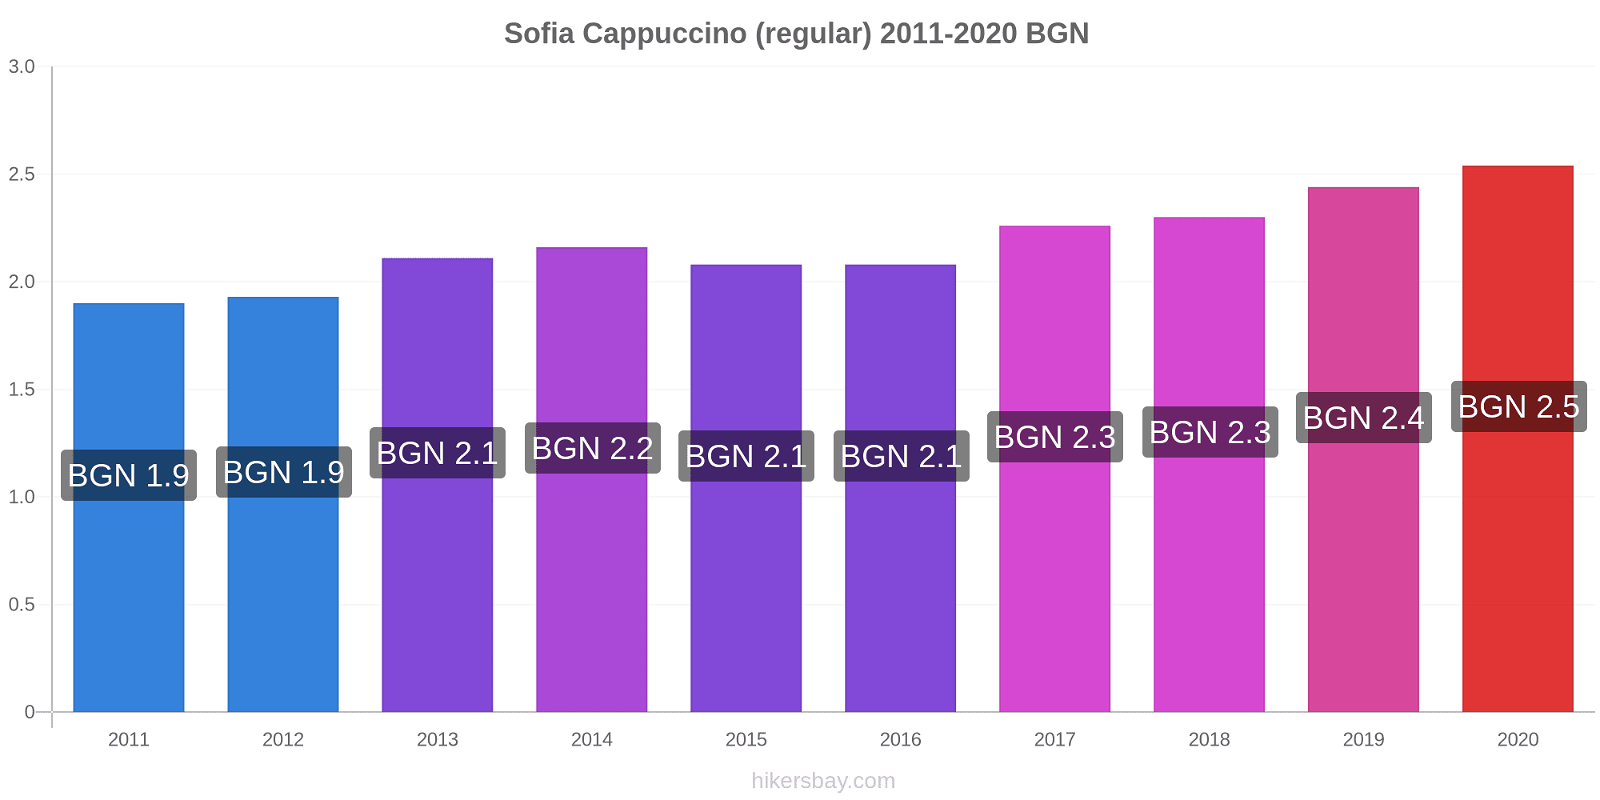 Sofia price changes Cappuccino (regular) hikersbay.com